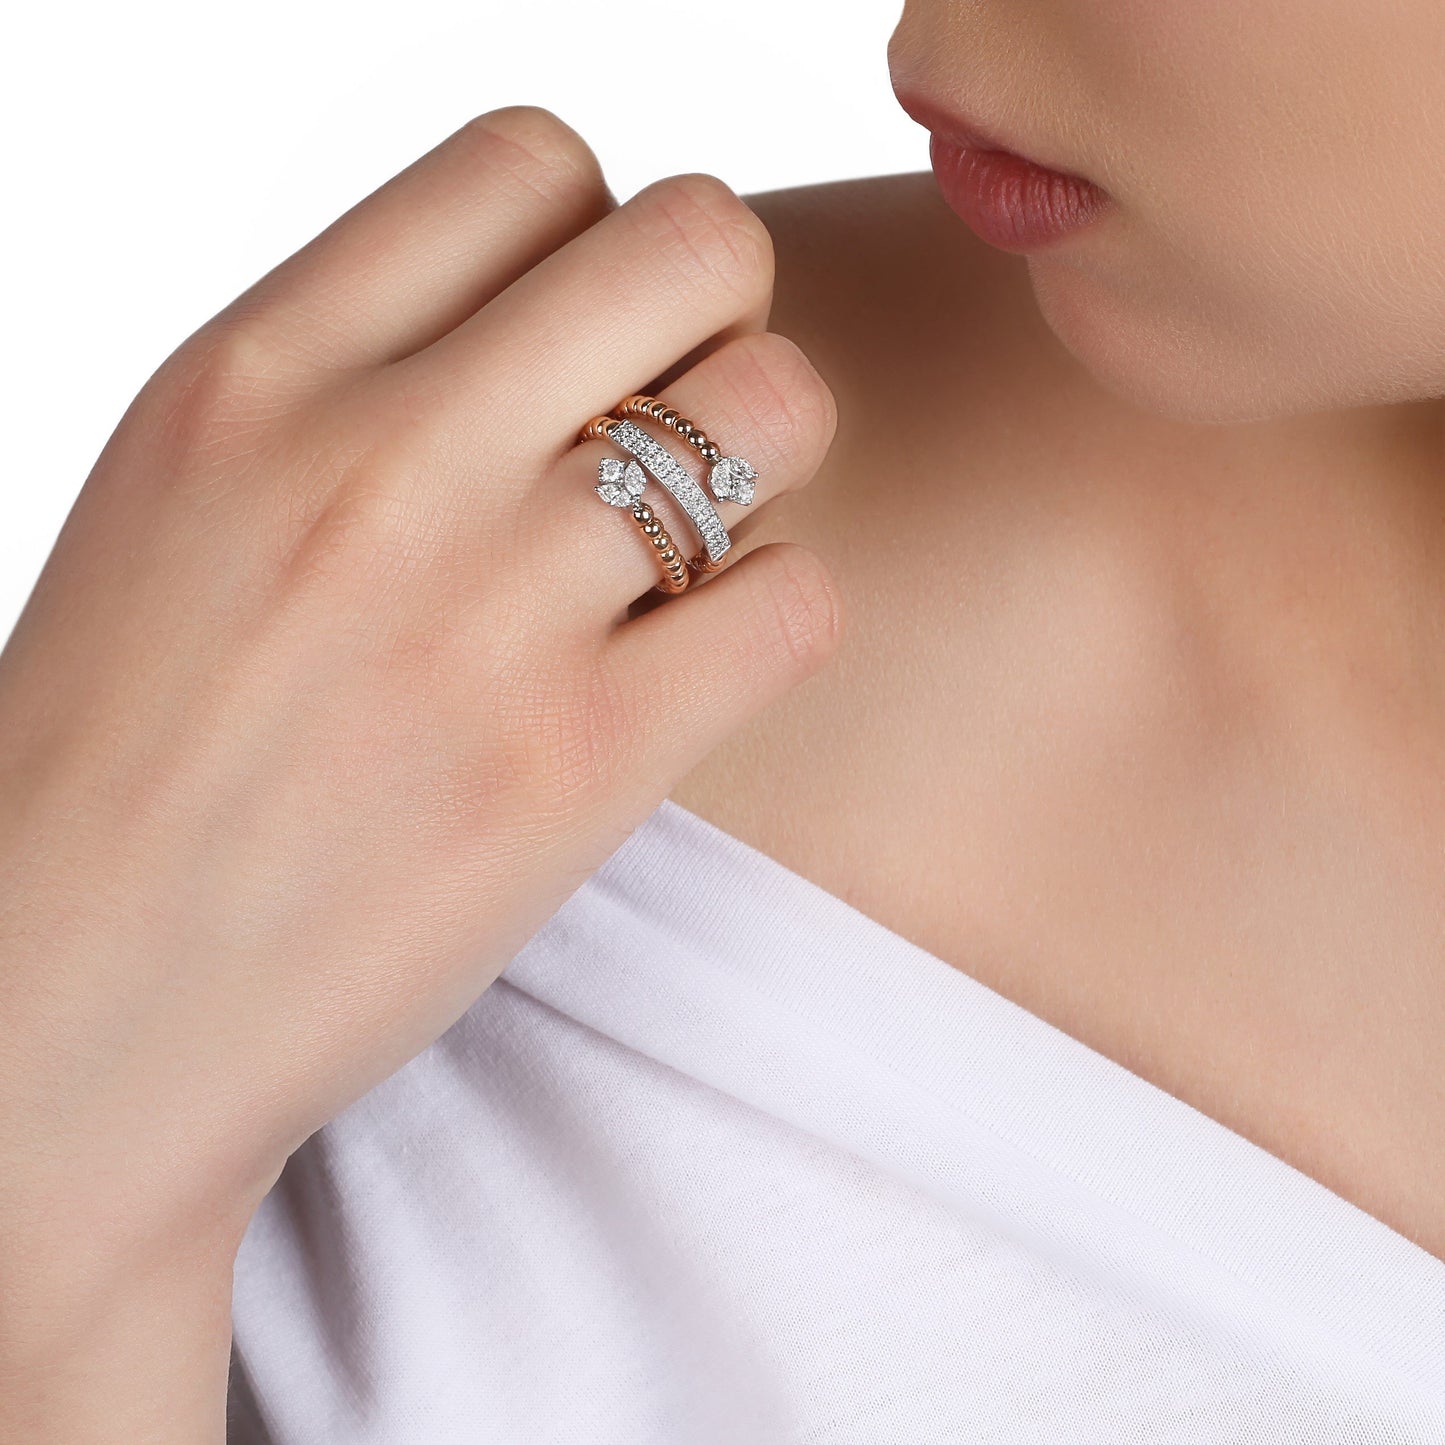 Spiral Diamond Ring | jewellery store | diamond rings